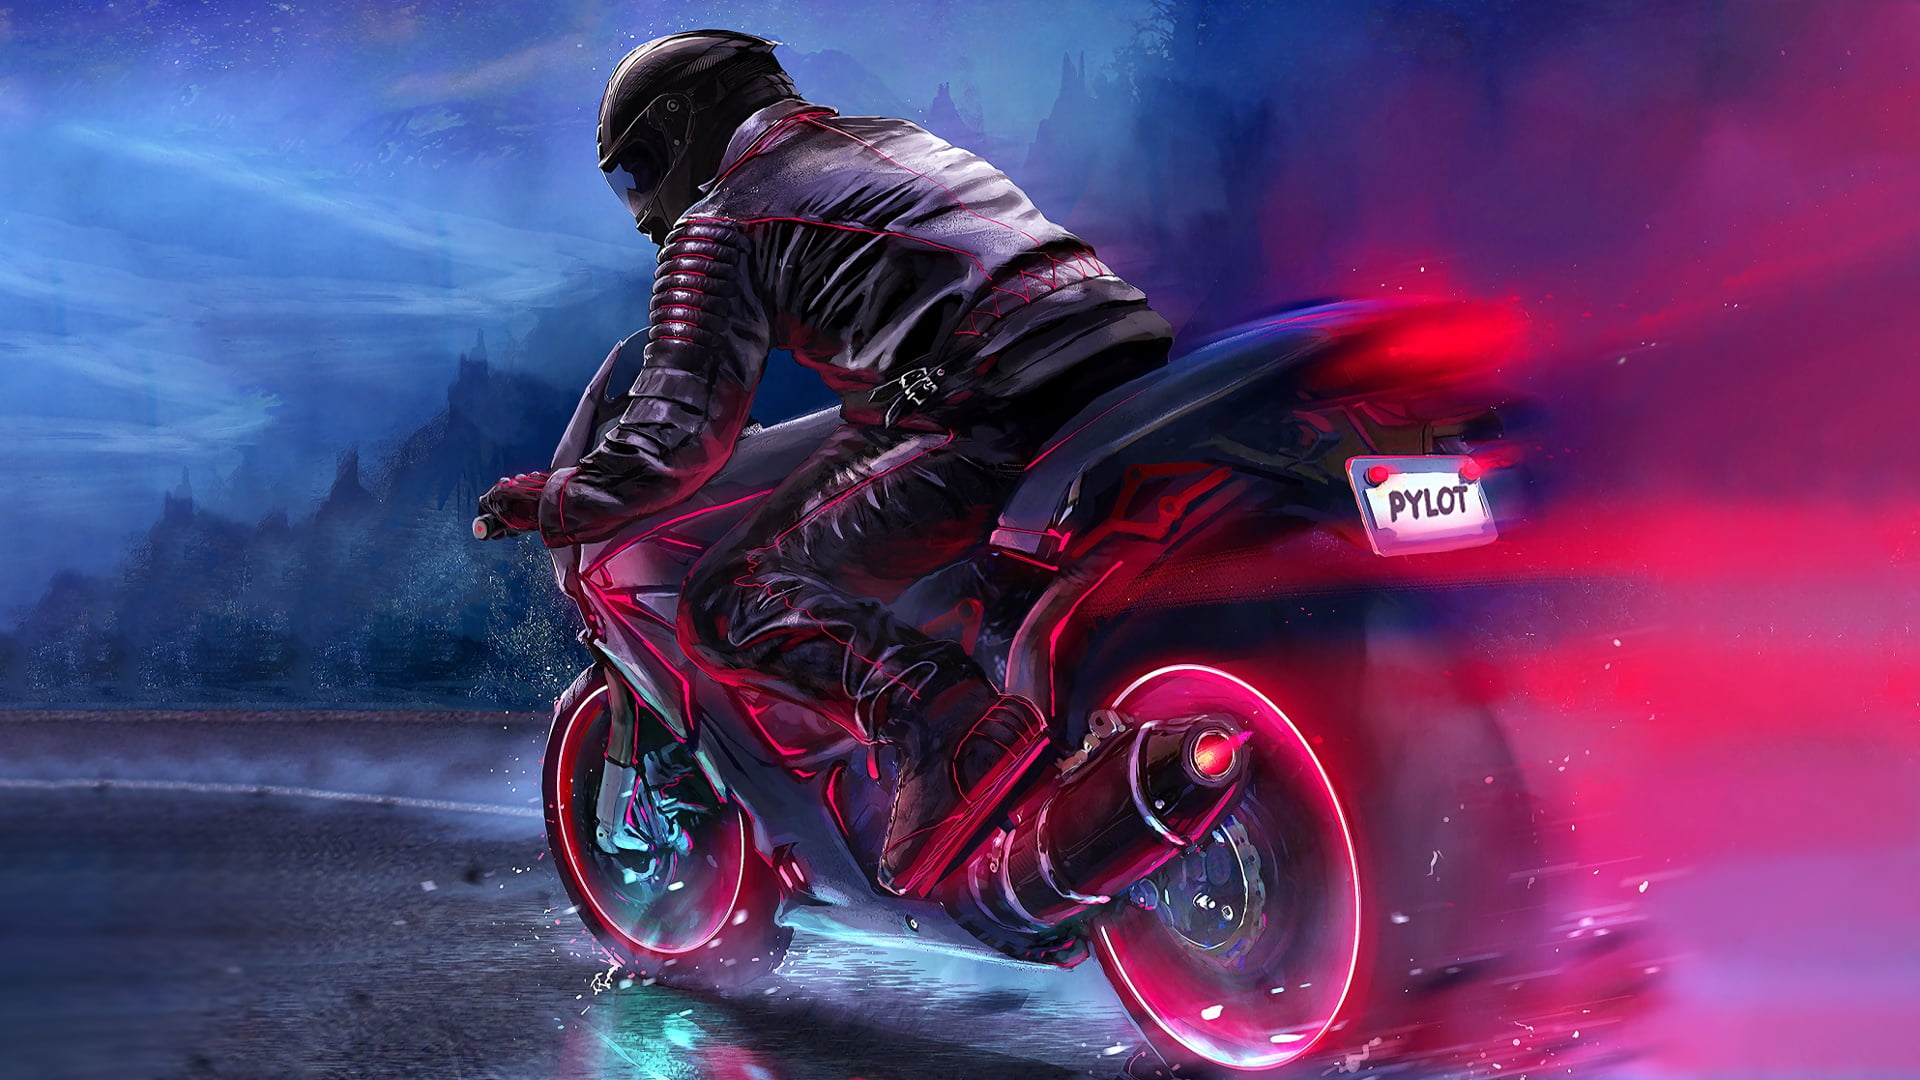 Wallpaper Black And Red Sports Bike, Digital Art, Motorcycle, Pilot